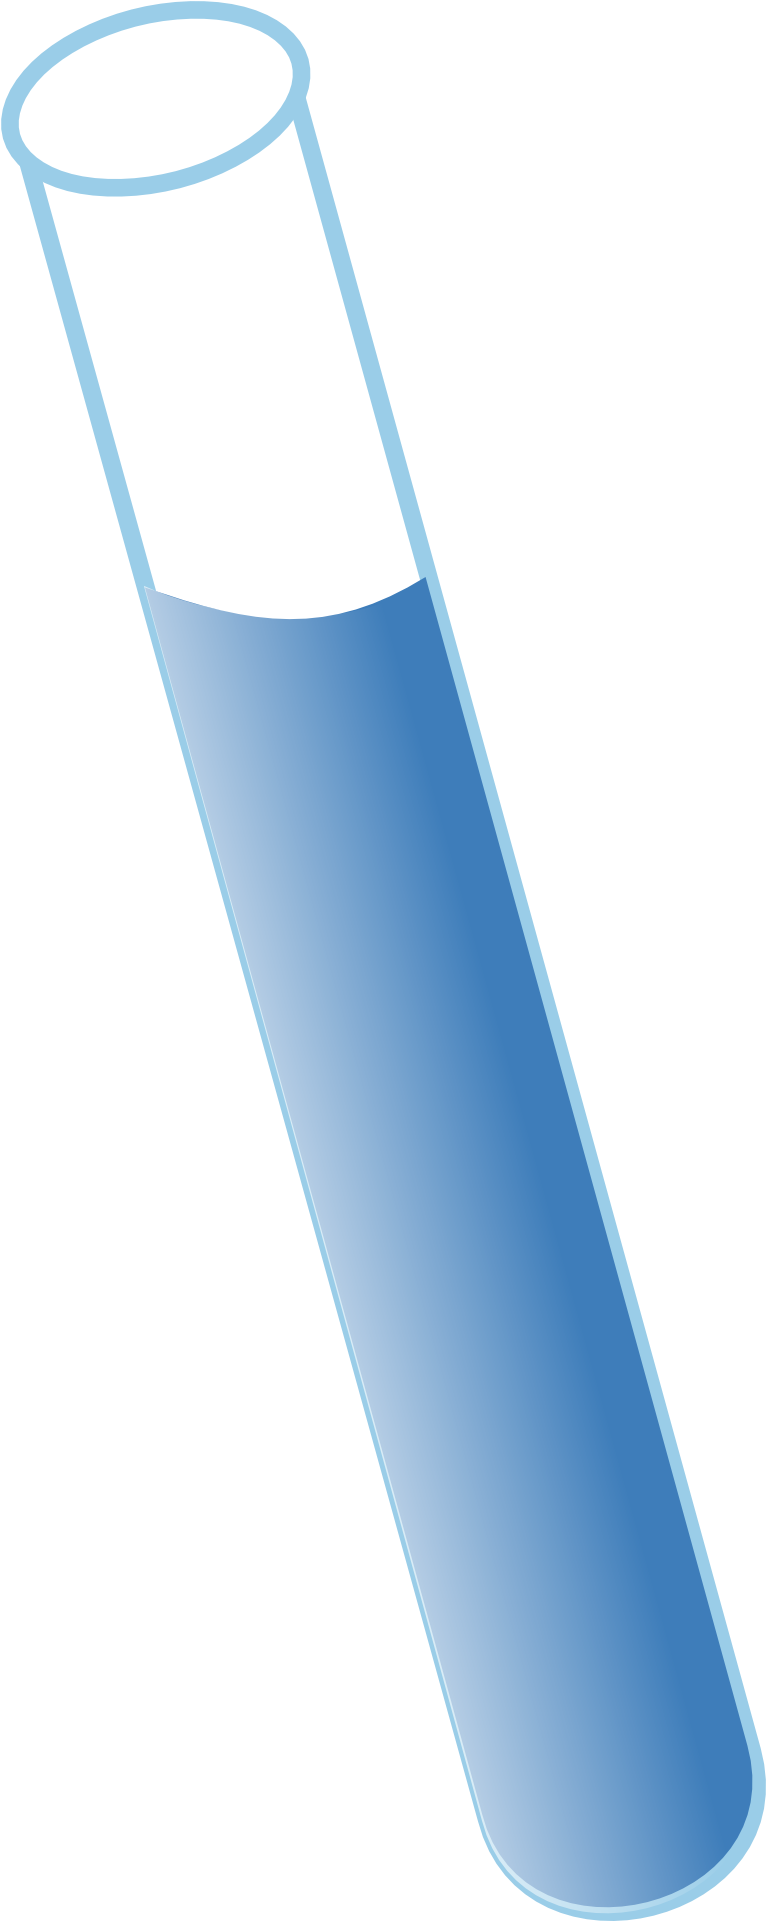 Test Tubes Laboratory Chemistry Beaker Clip Art - Test Tubes Laboratory Chemistry Beaker Clip Art (960x1920)